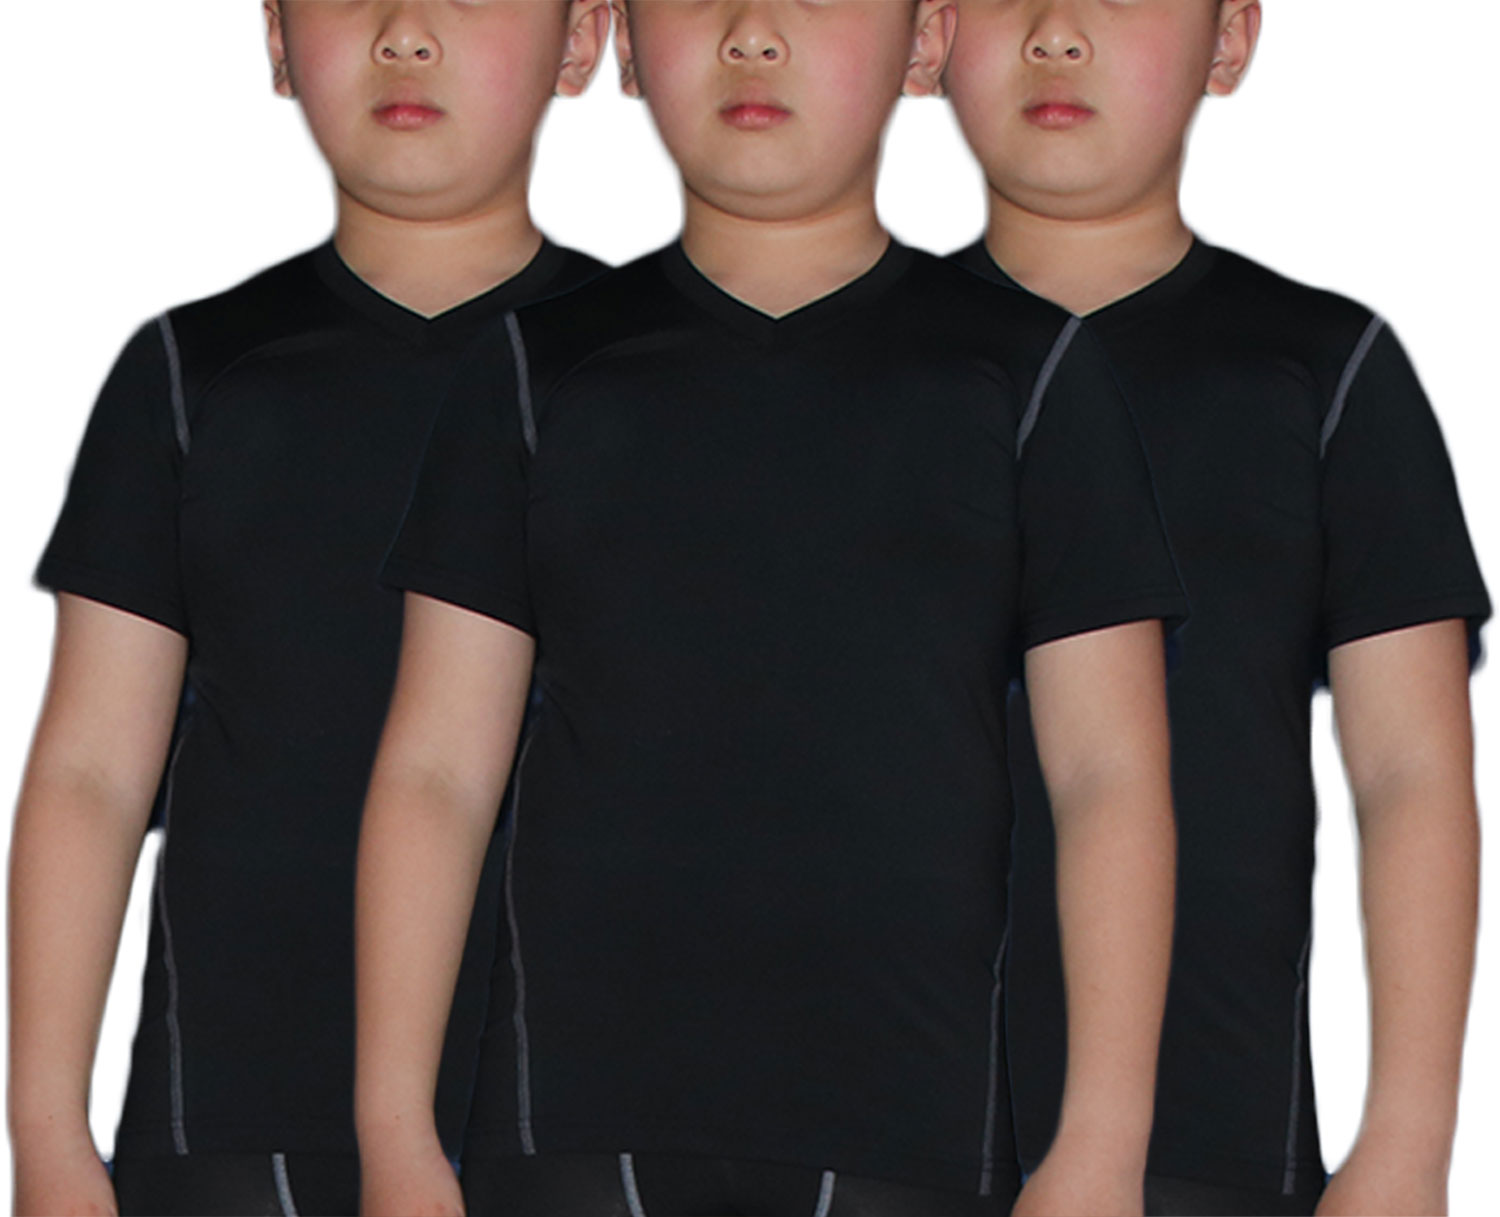 Lanbaosi Boys Compression Baselayer Top Unisex Short Sleeve Under Shirt Size 5, White / 10